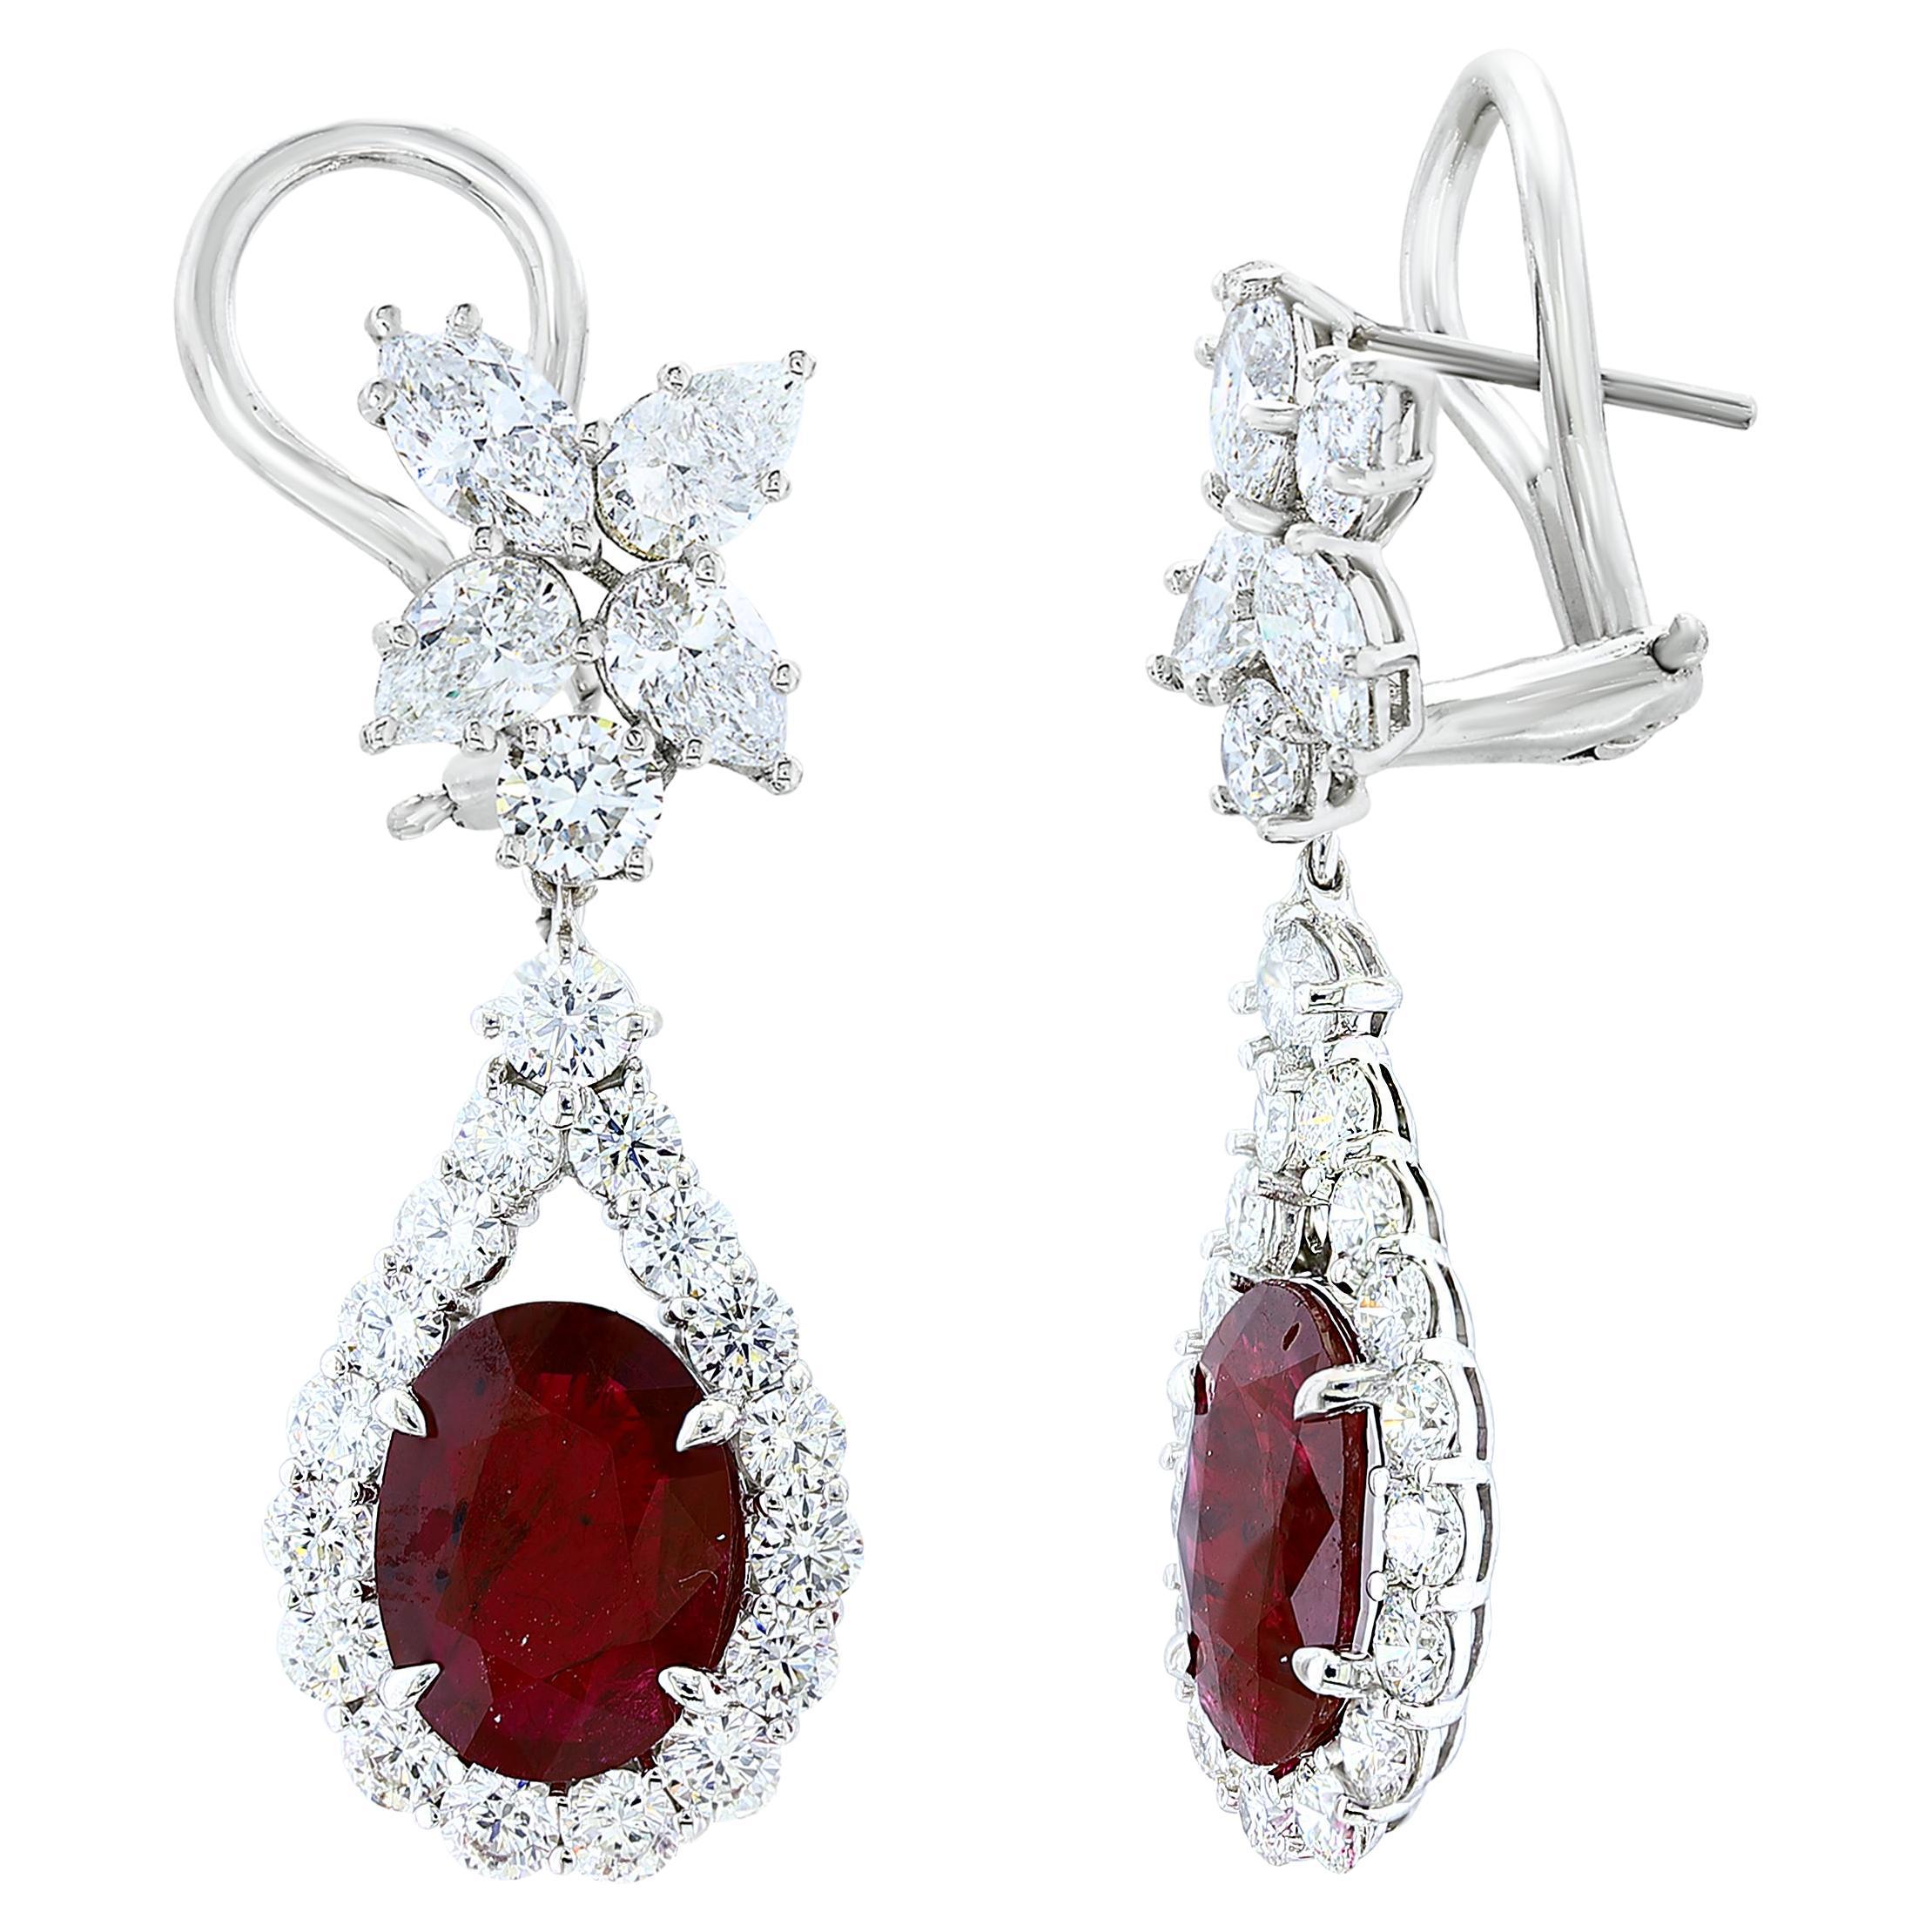 Certified 9.05 Carat Burma Ruby and Diamond Drop Earrings in 18K White Gold For Sale